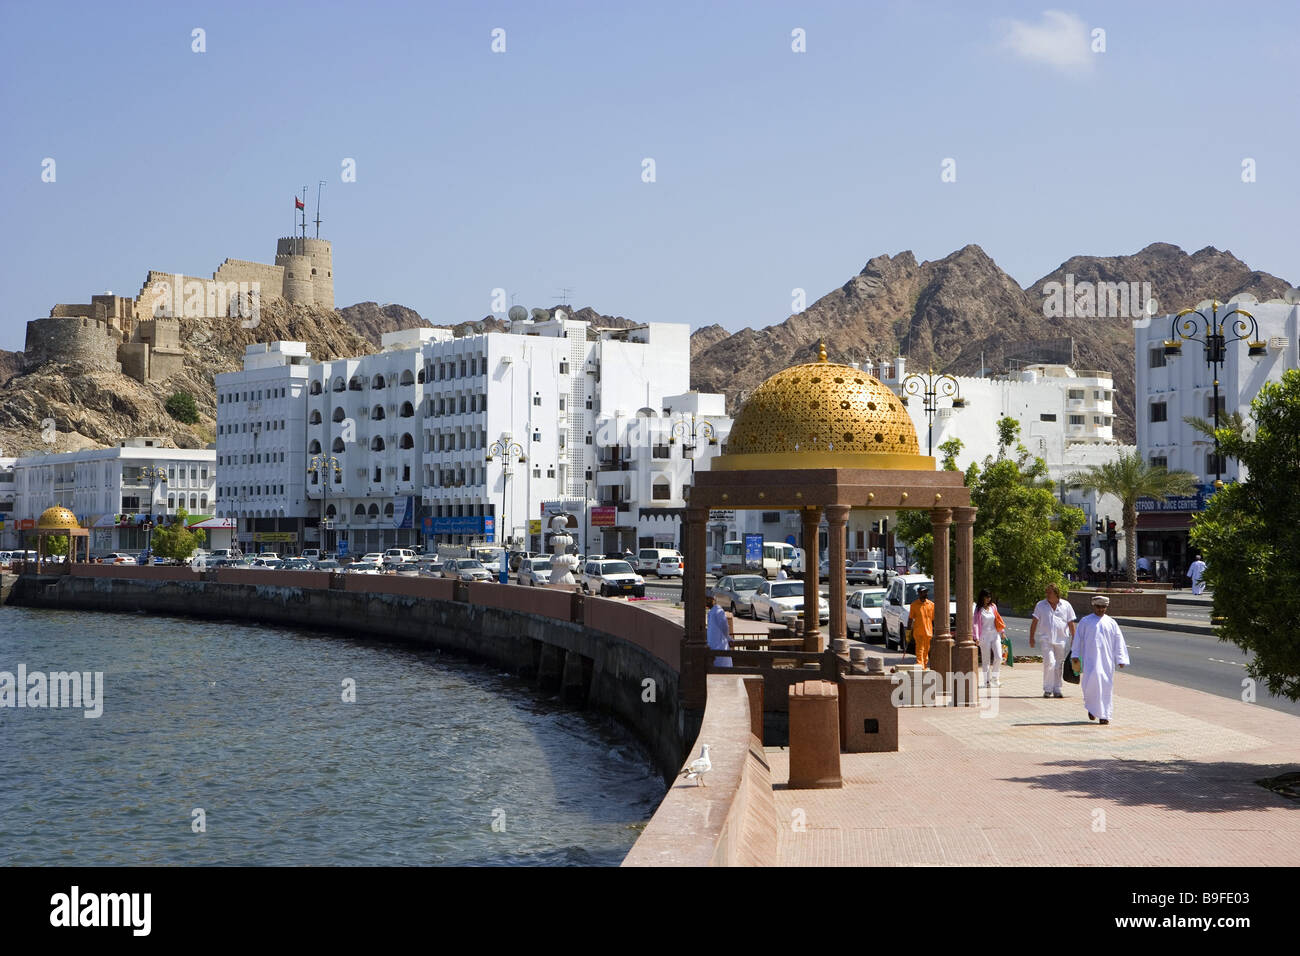 Oman Muscat Dhow Bay Promenade Blick Mutrha Fort Sultanat Hauptstadt befindet sich Gebäude Konstruktionen Hafenpromenade Pavillon Stockfoto